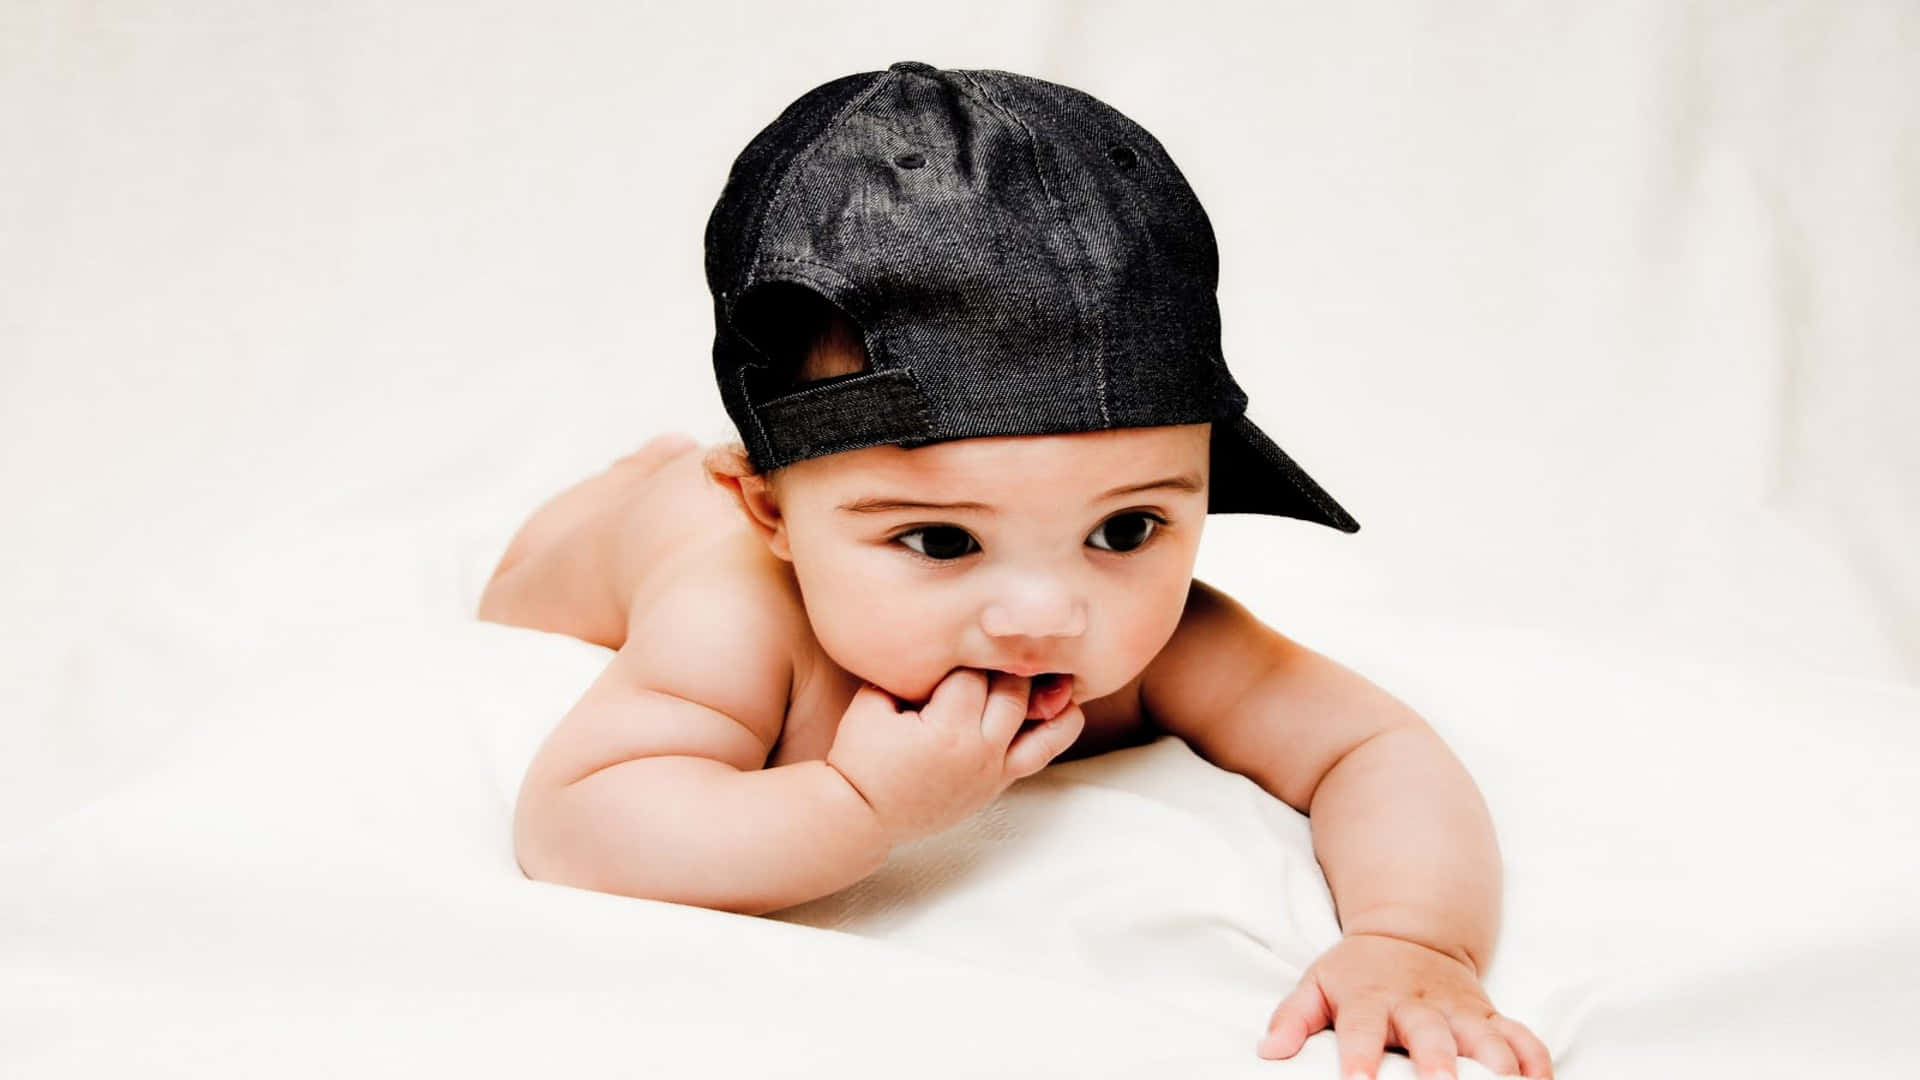 Baby Boy With A Black Cap